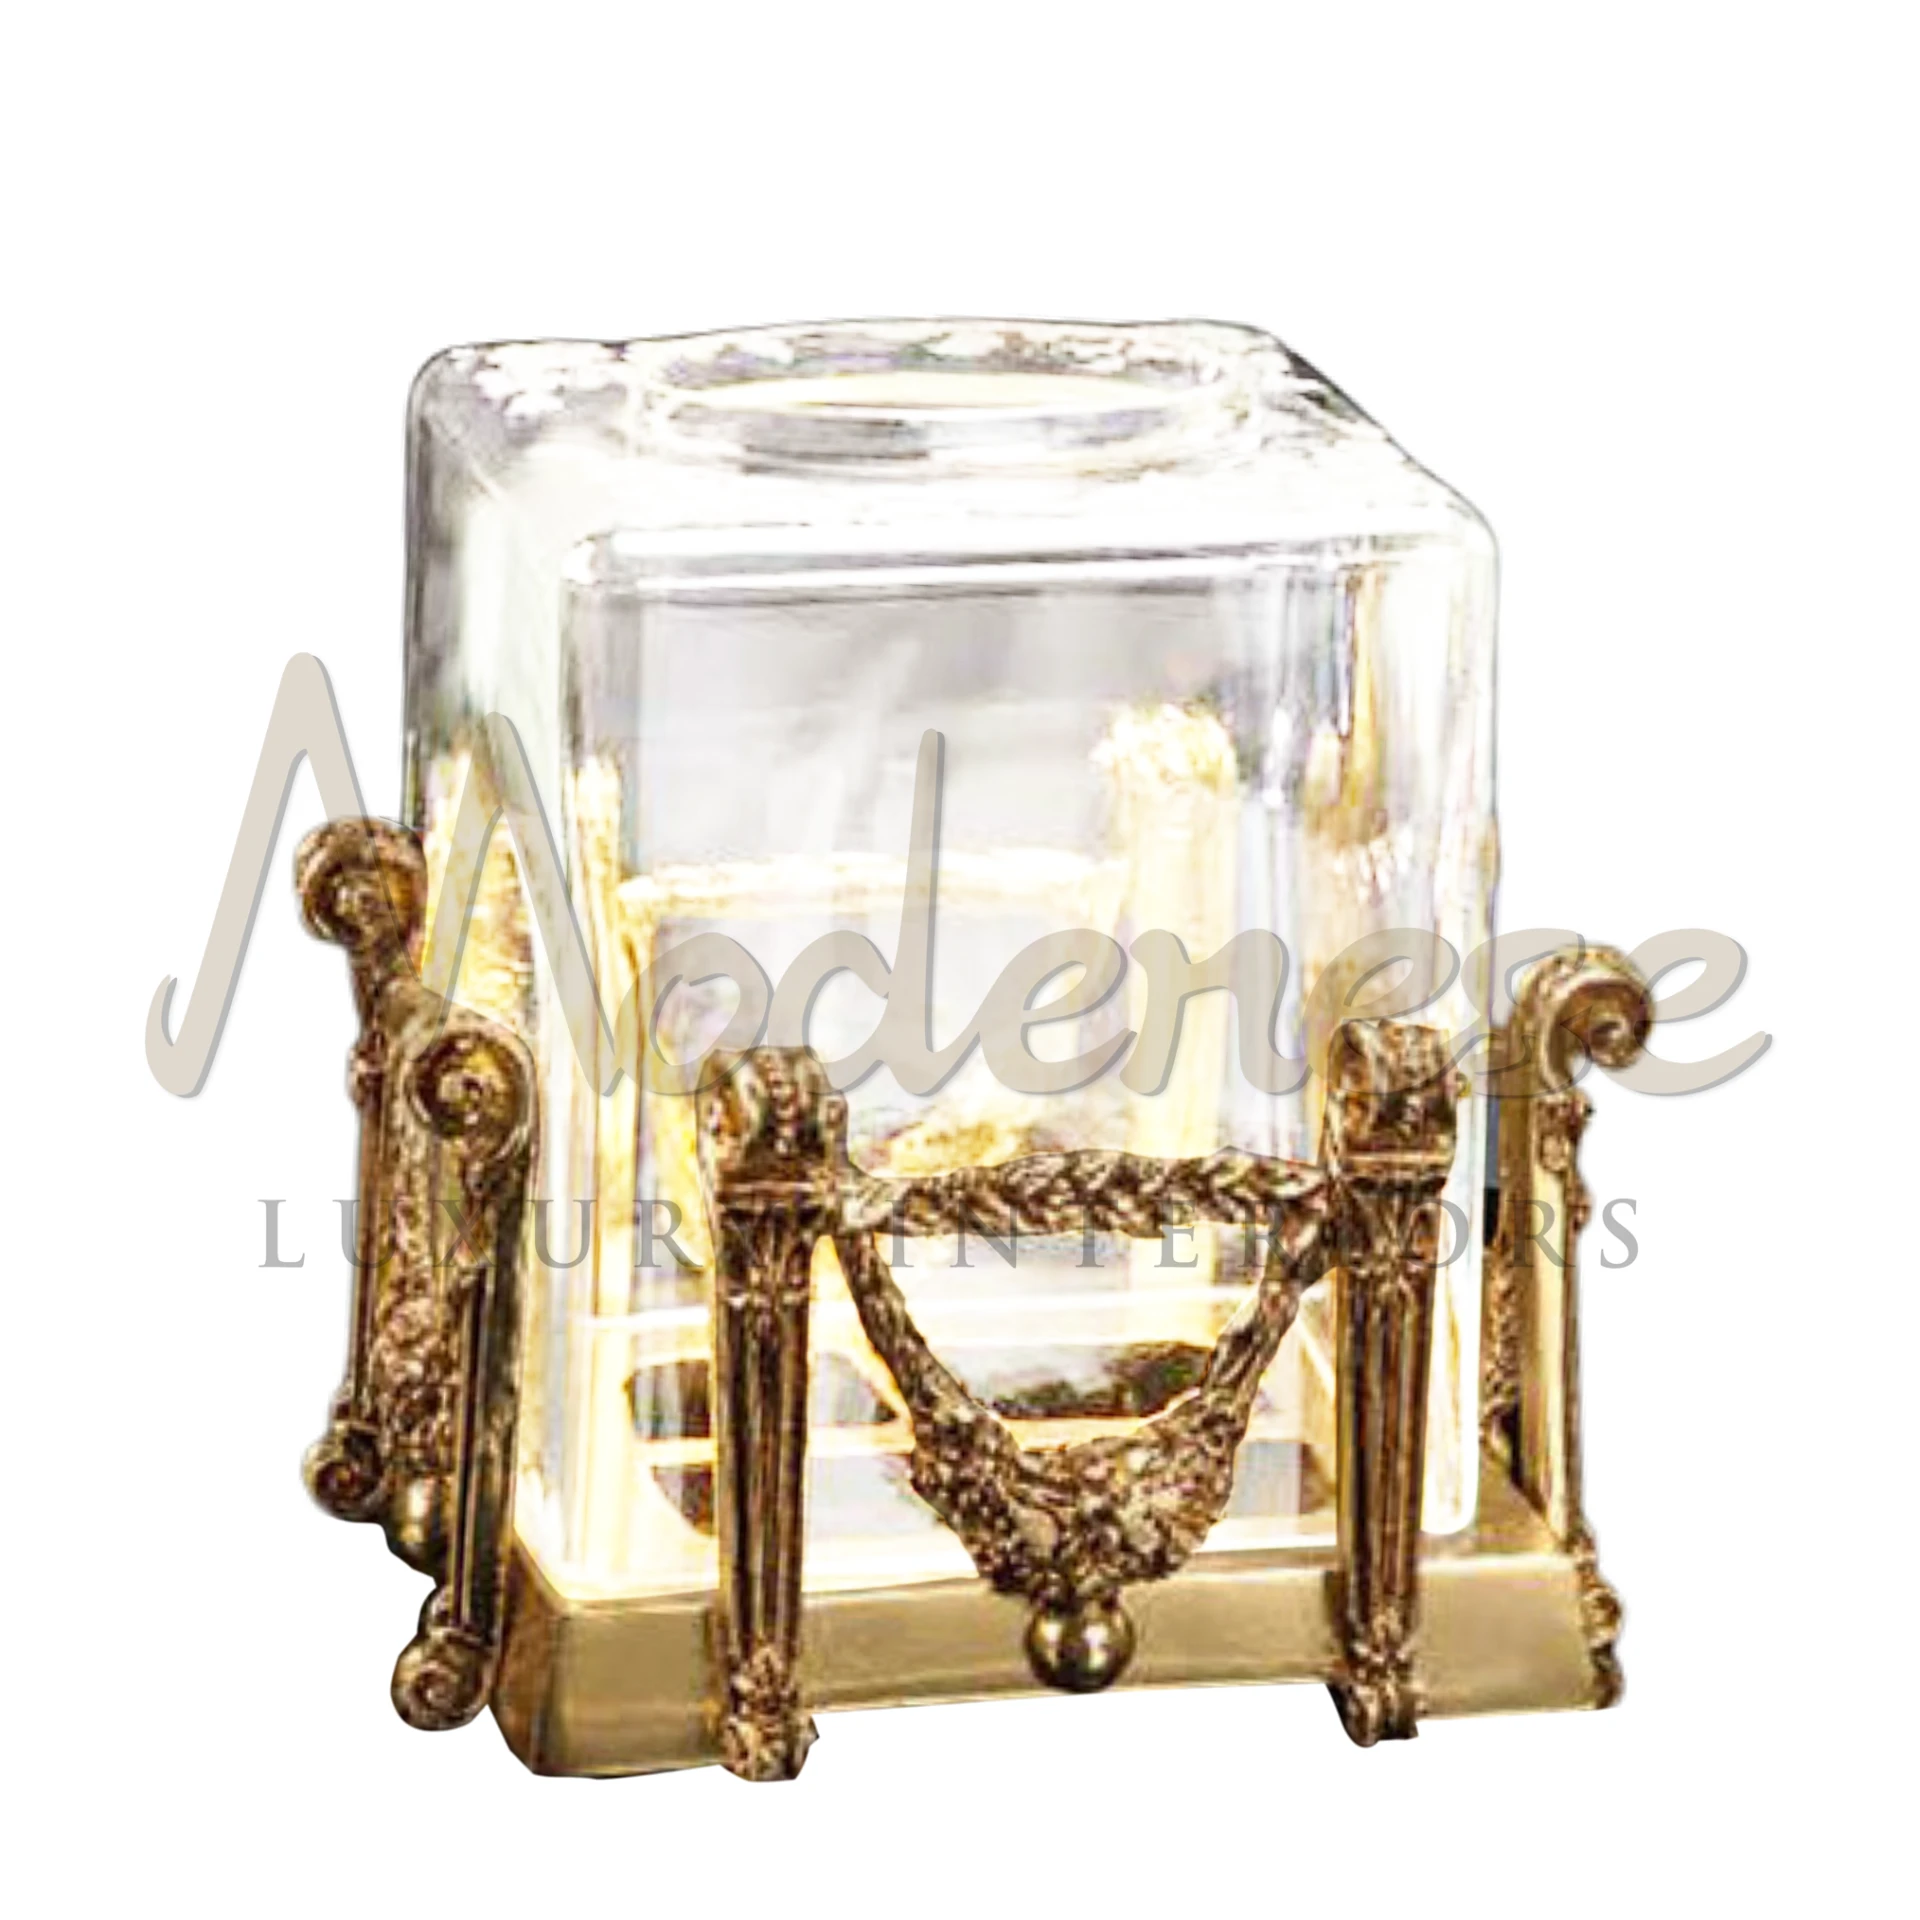 Luxurious Elegant Gold Toothbrush Holder in ceramic, glass, or metal, enhancing bathroom elegance.